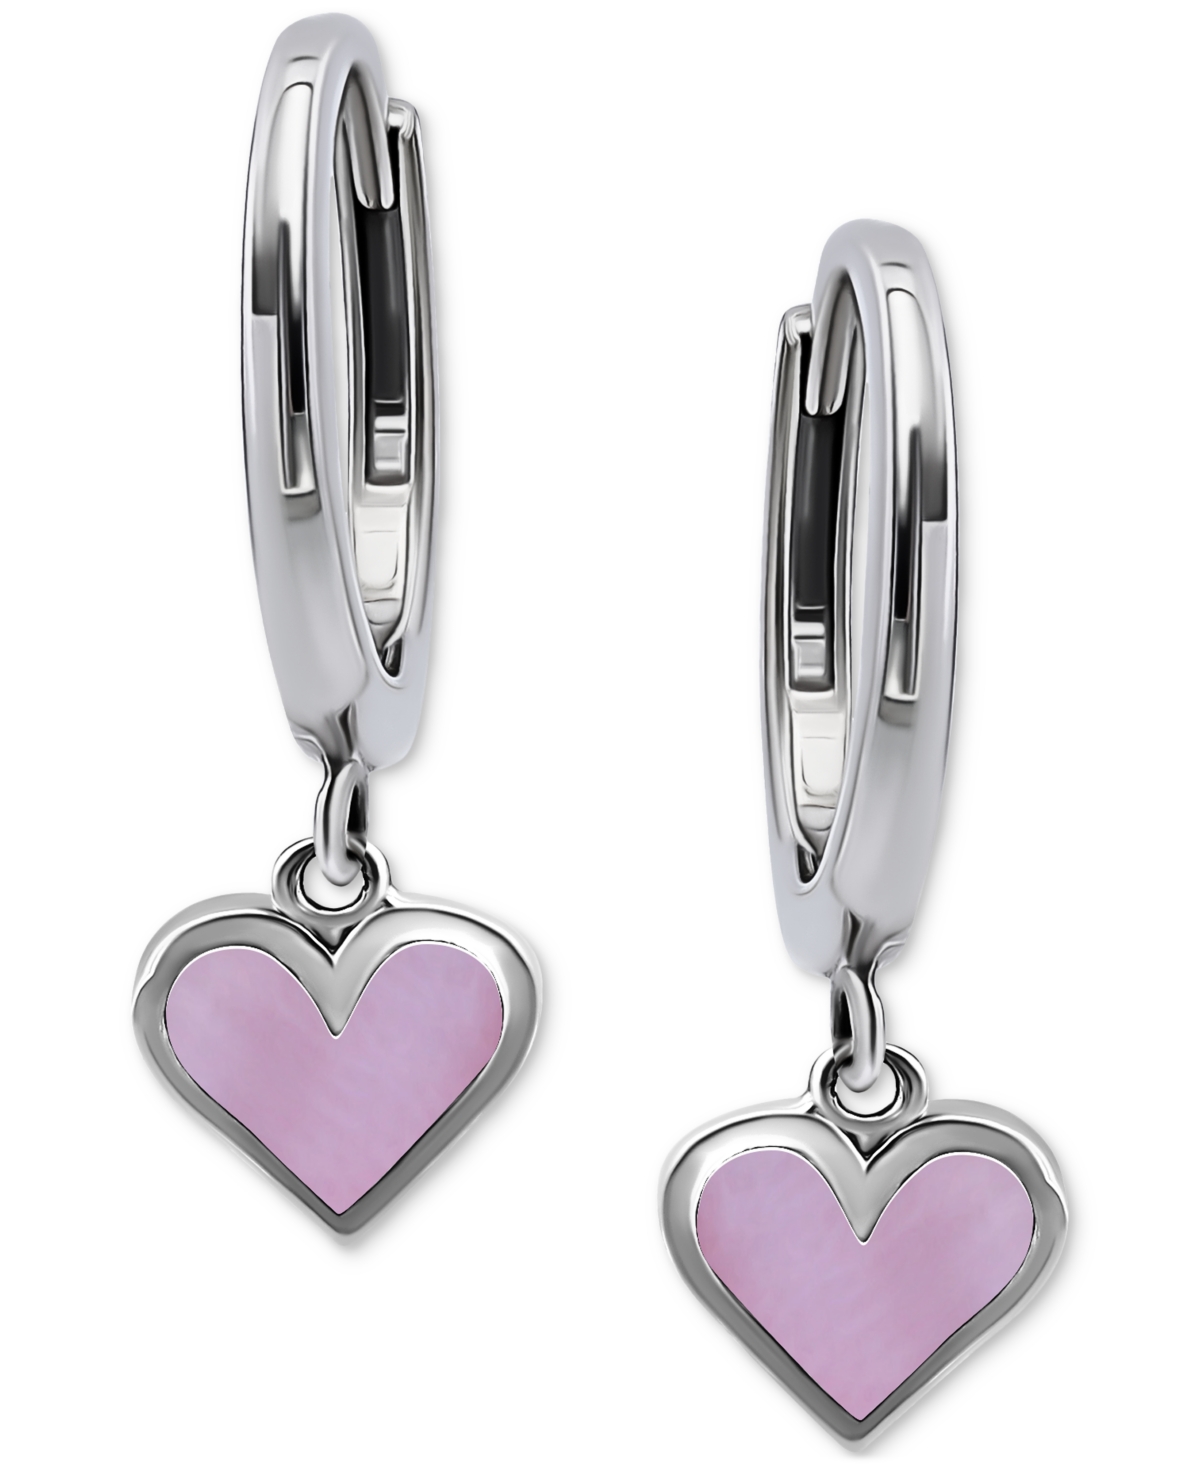 Pink Shell Heart Dangle Hoop Drop Earrings in Sterling Silver, Created for Macy's - Pink Shell